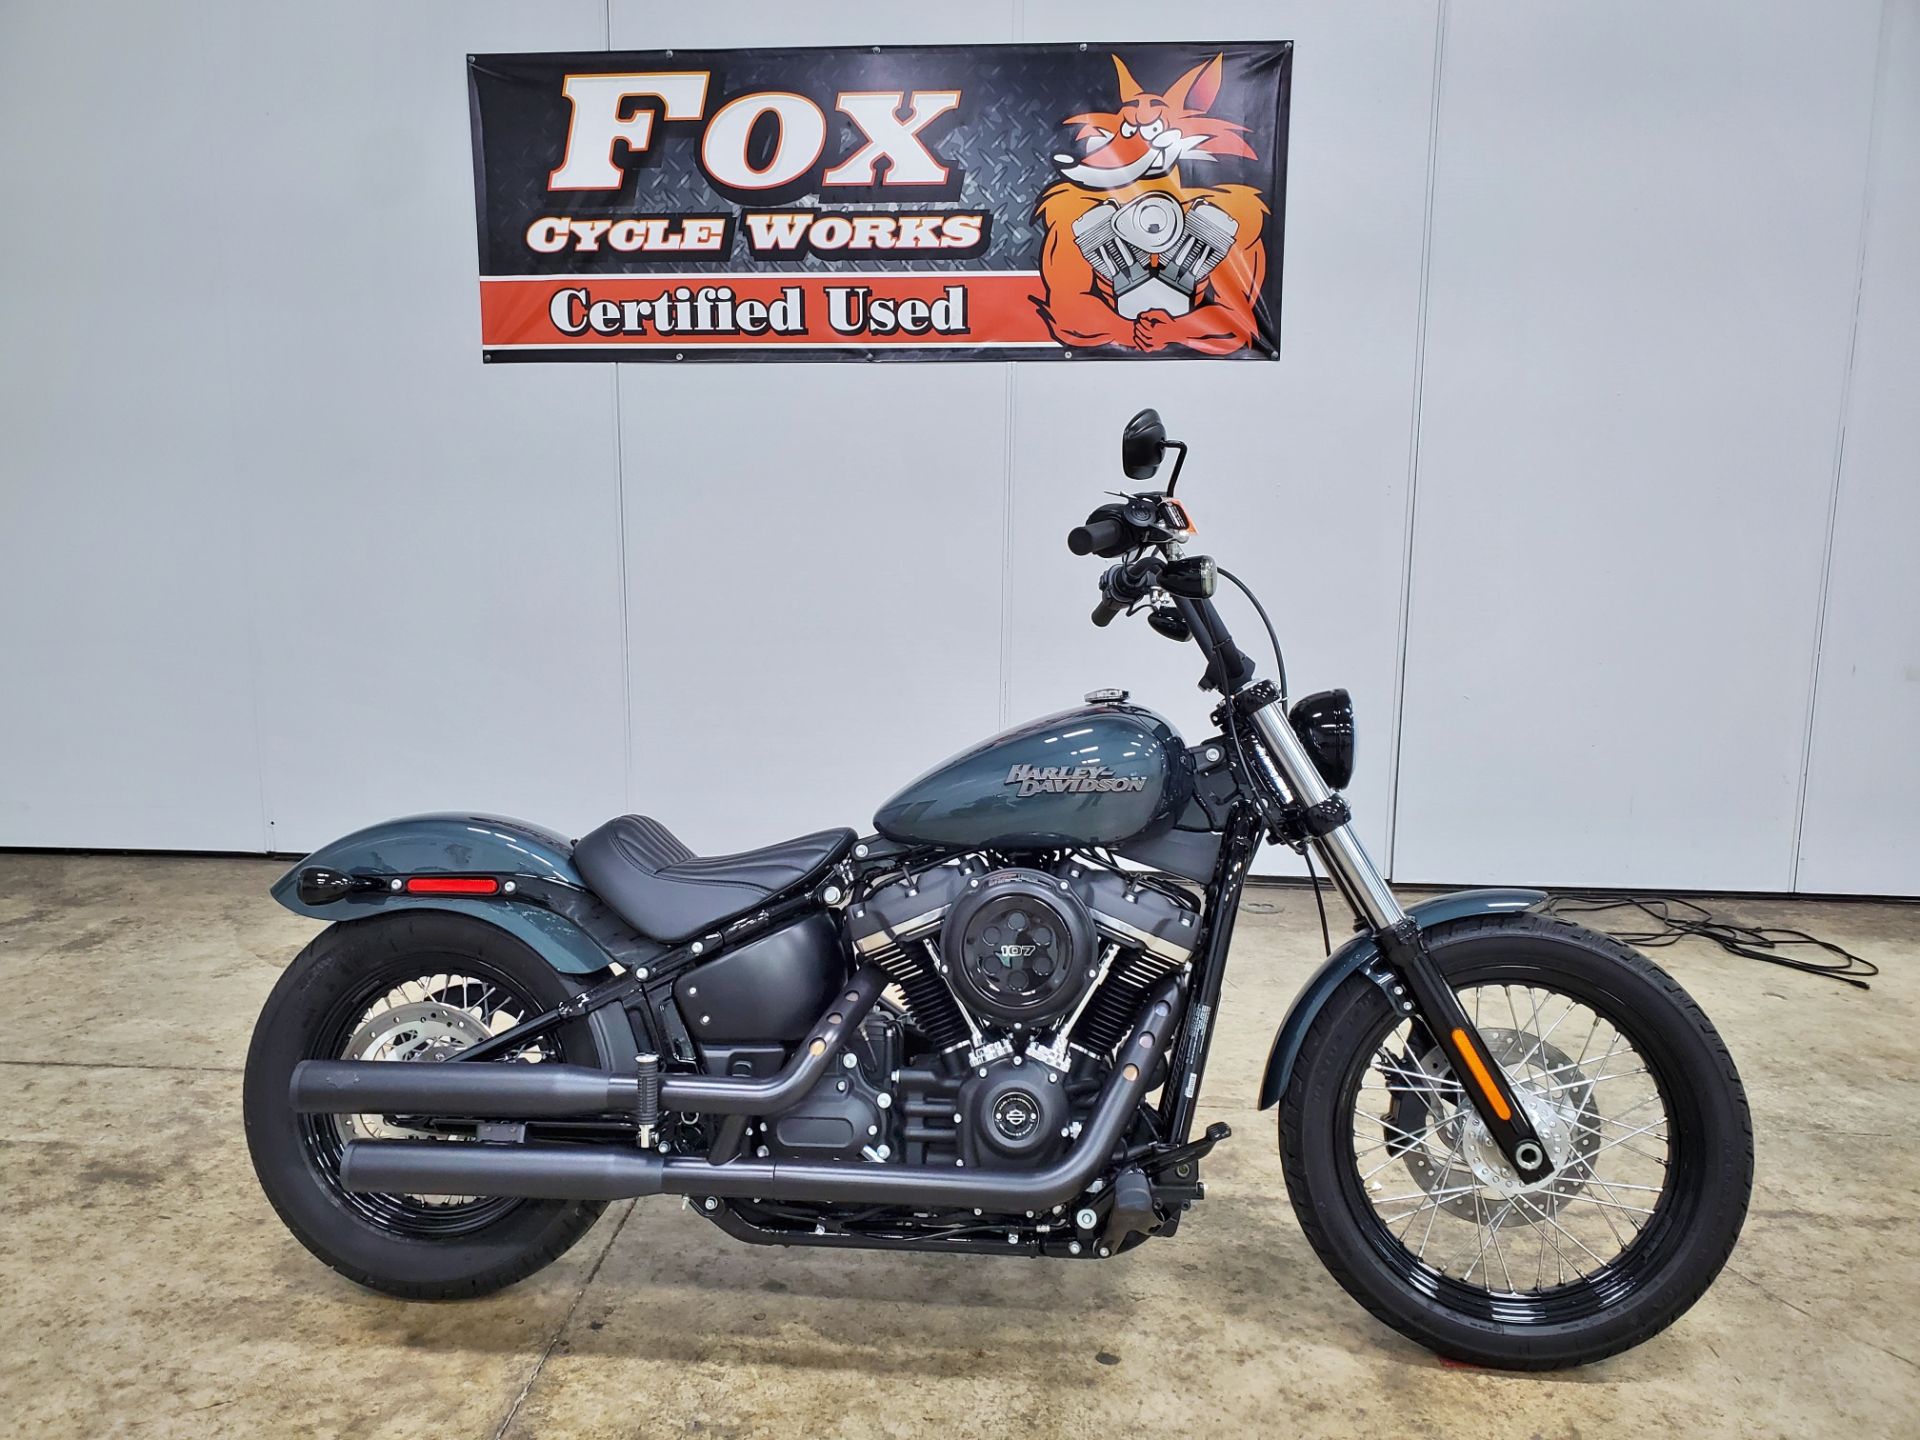 2020 Harley-Davidson Street Bob® in Sandusky, Ohio - Photo 1